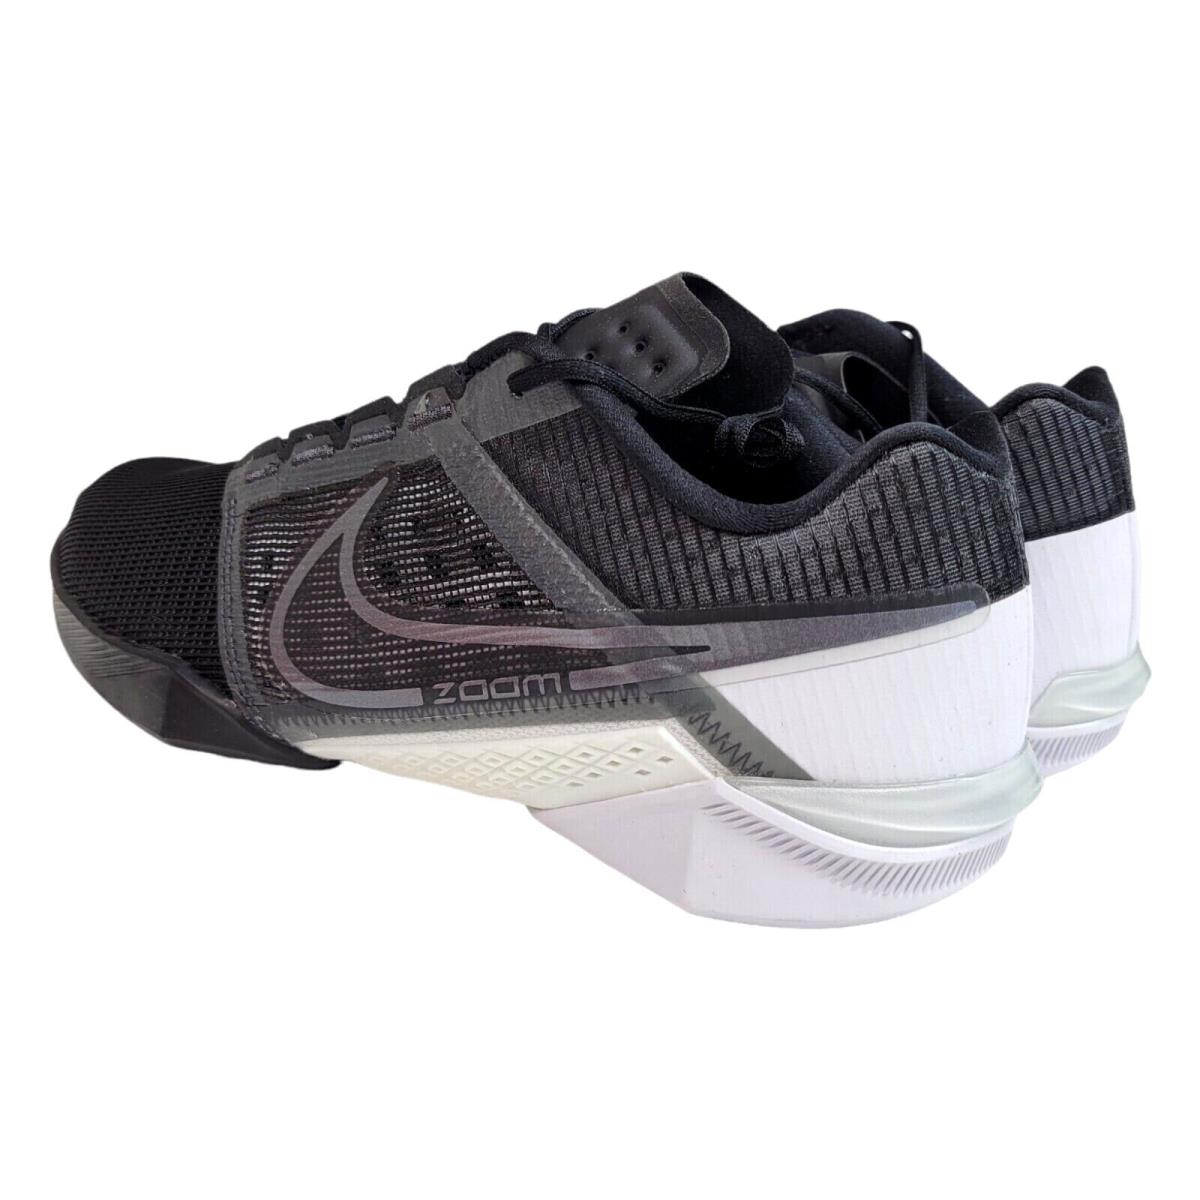 Nike shoes Zoom Metcon - Black 3